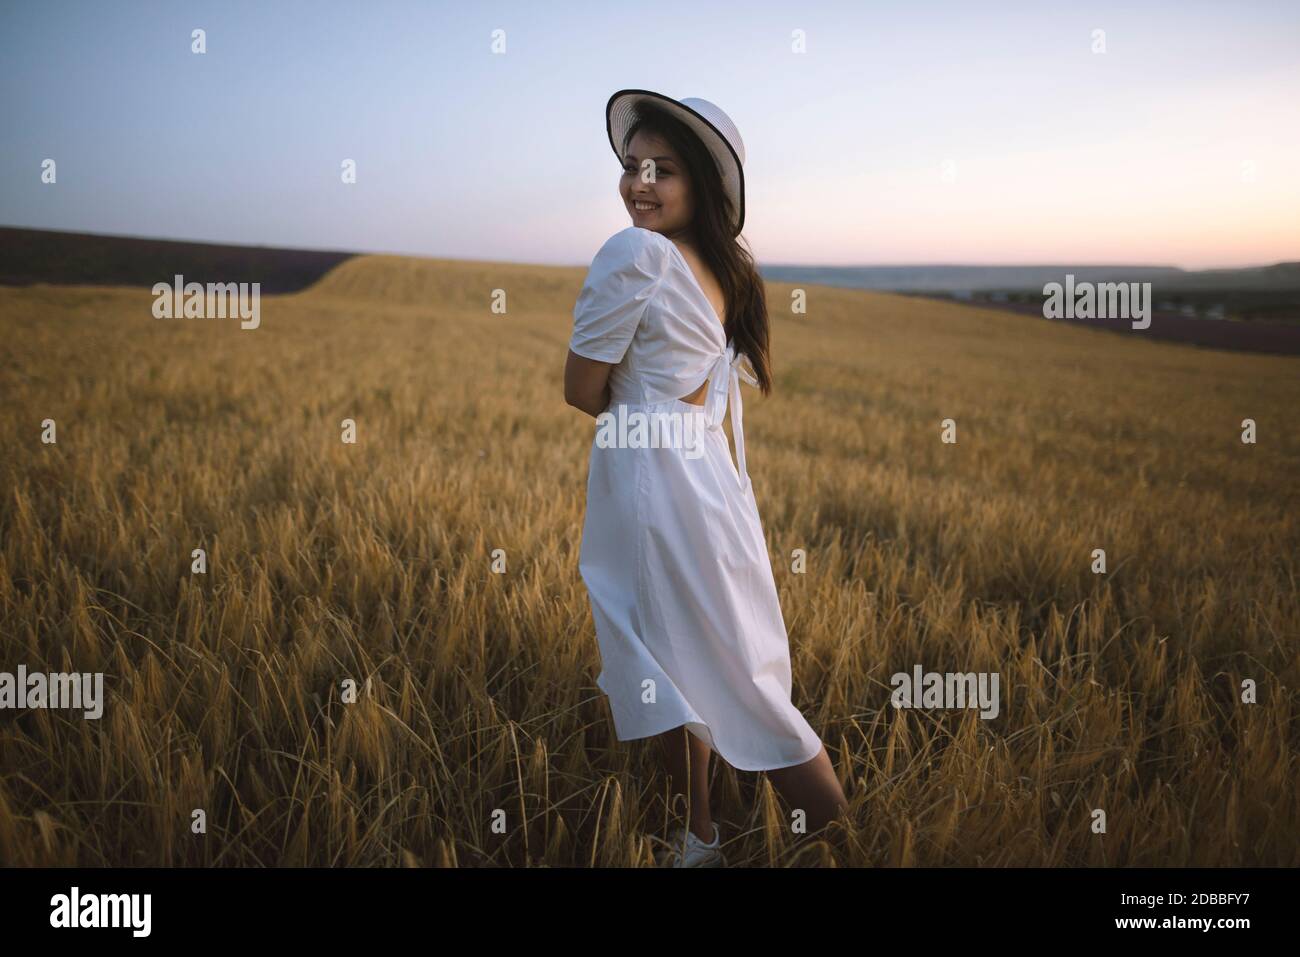 Frankreich, Junge Frau in weißem Kleid im Getreidefeld stehend Stockfoto